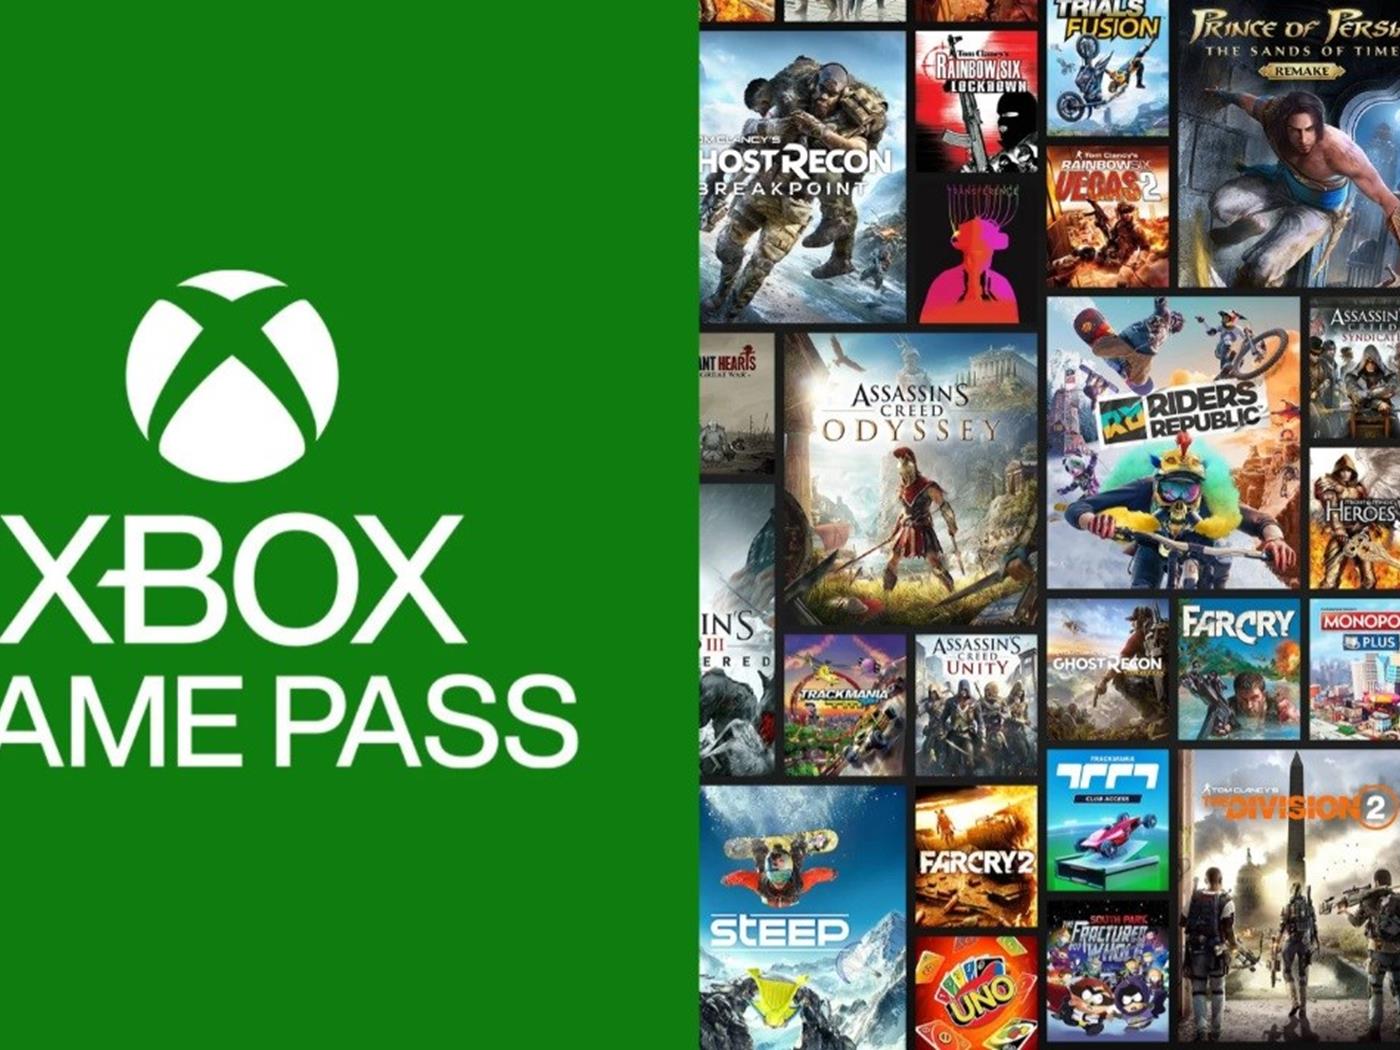 Xbox game services. Xbox Ultimate Pass игры. Xbox Ultimate Pass список игр. Гаме пасс для иксбокс игры. Икс бокс гейм пасс список игр.